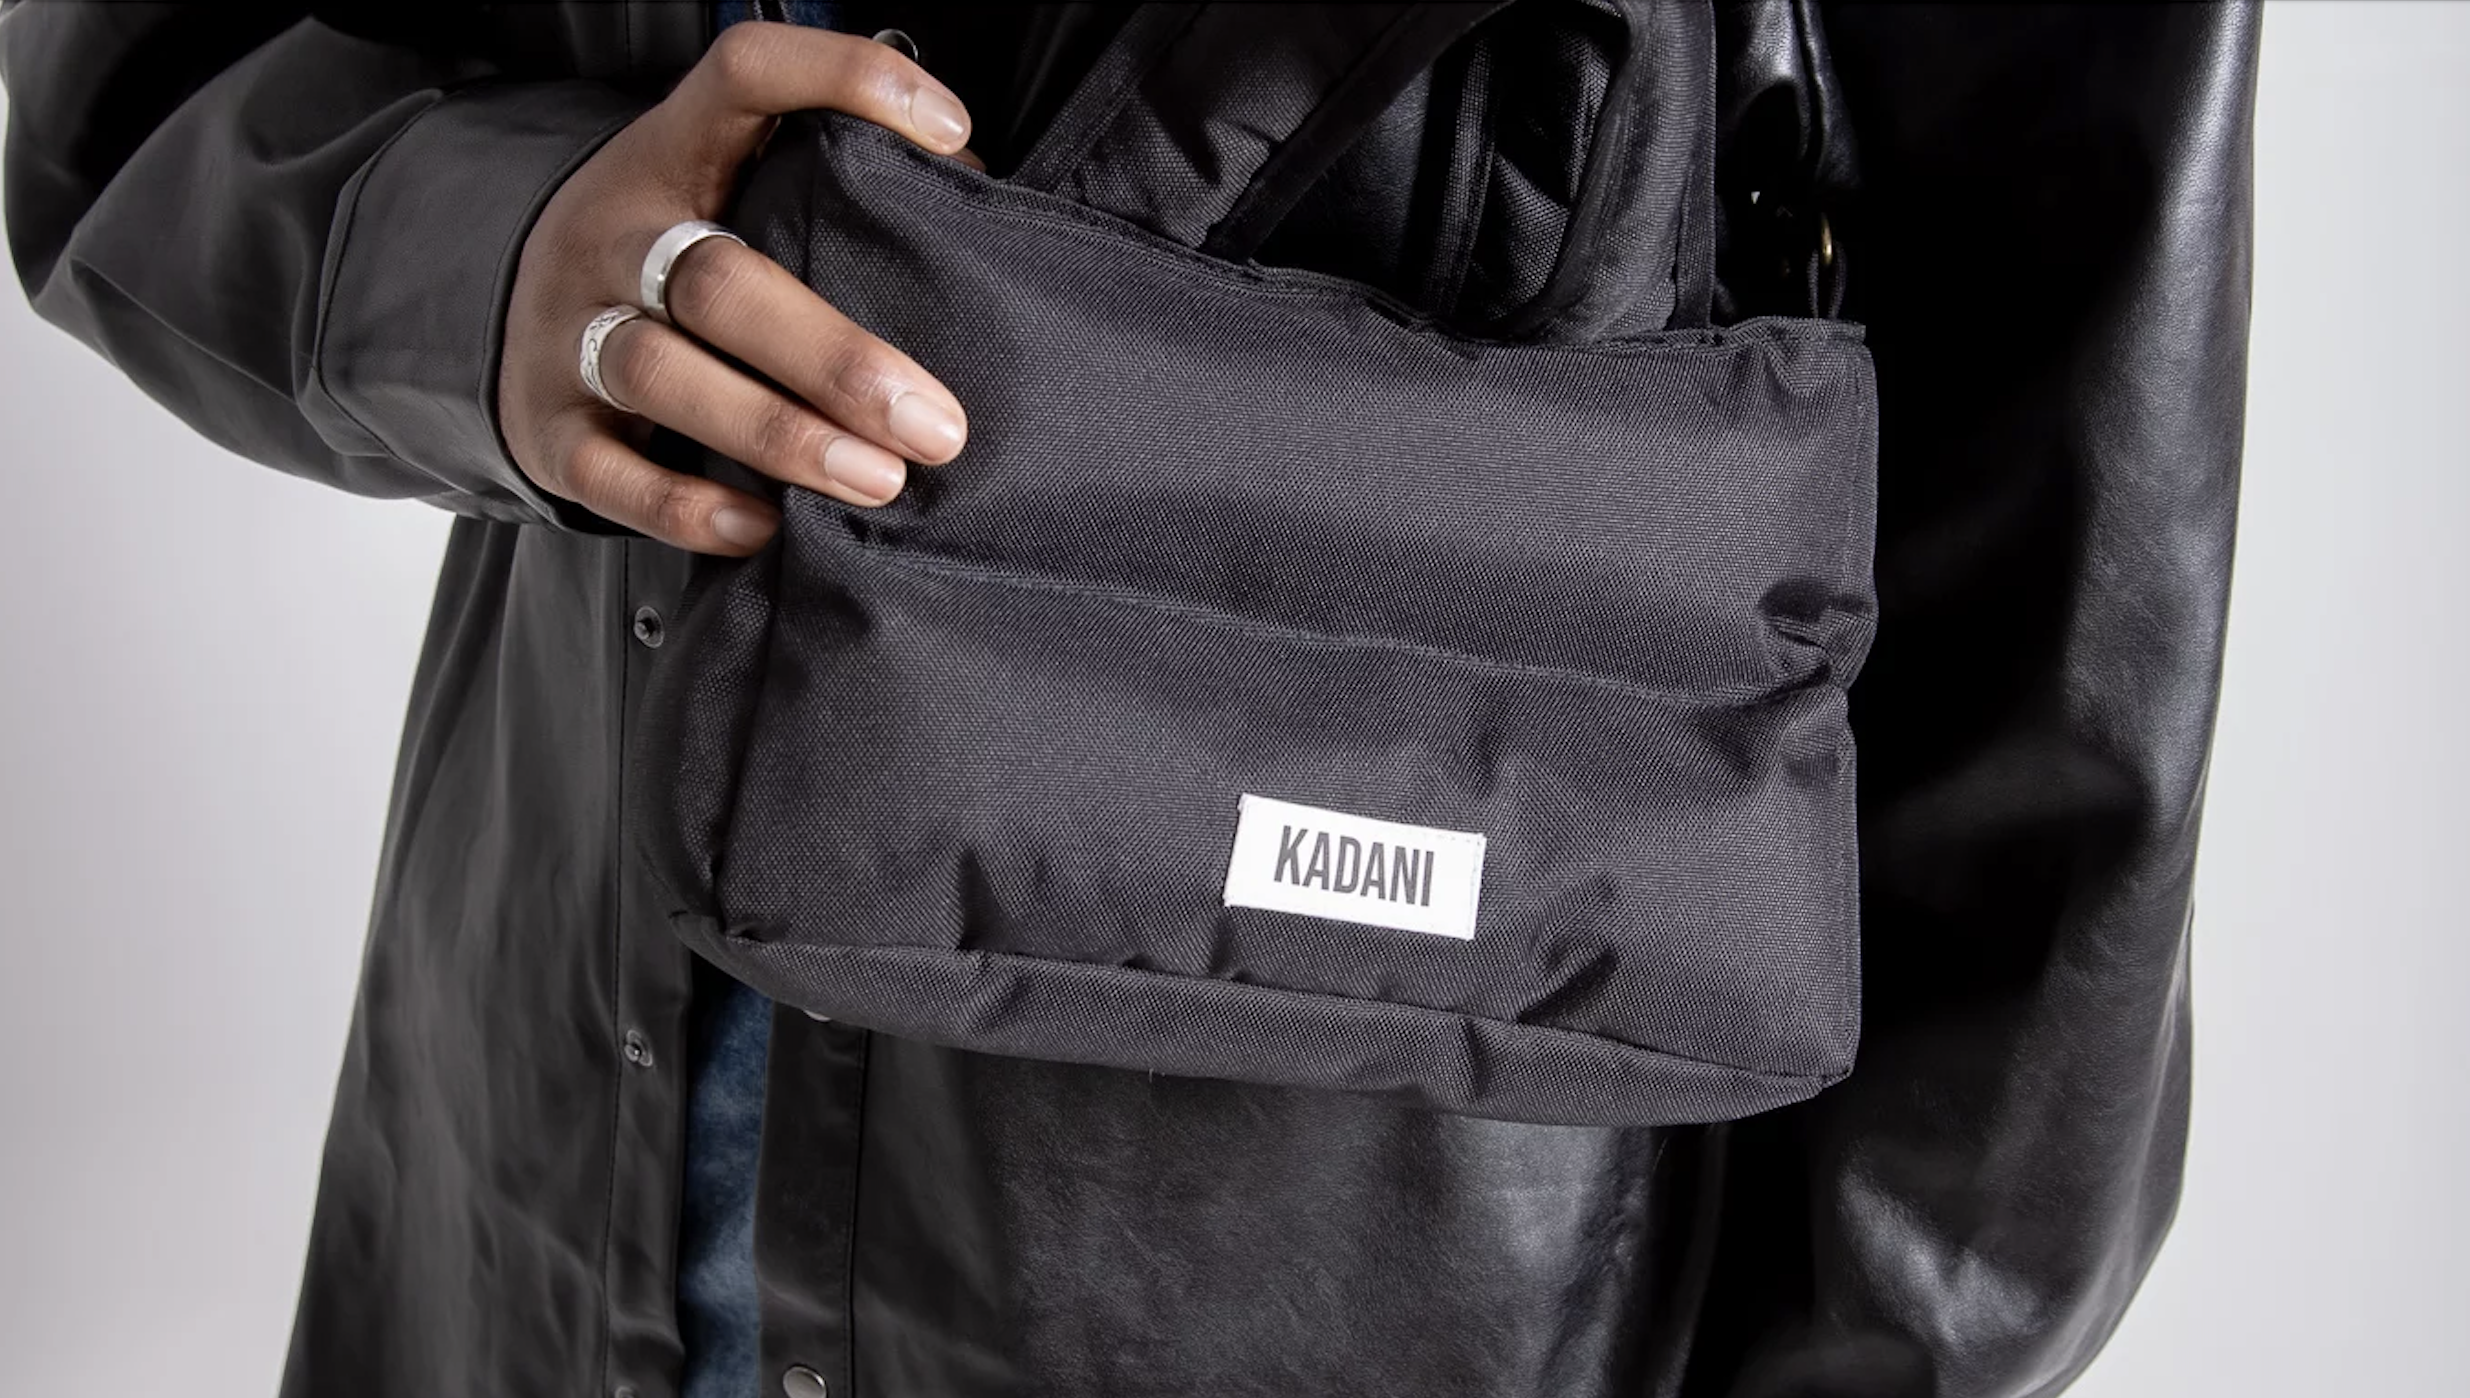 The black Kadani bag from the range